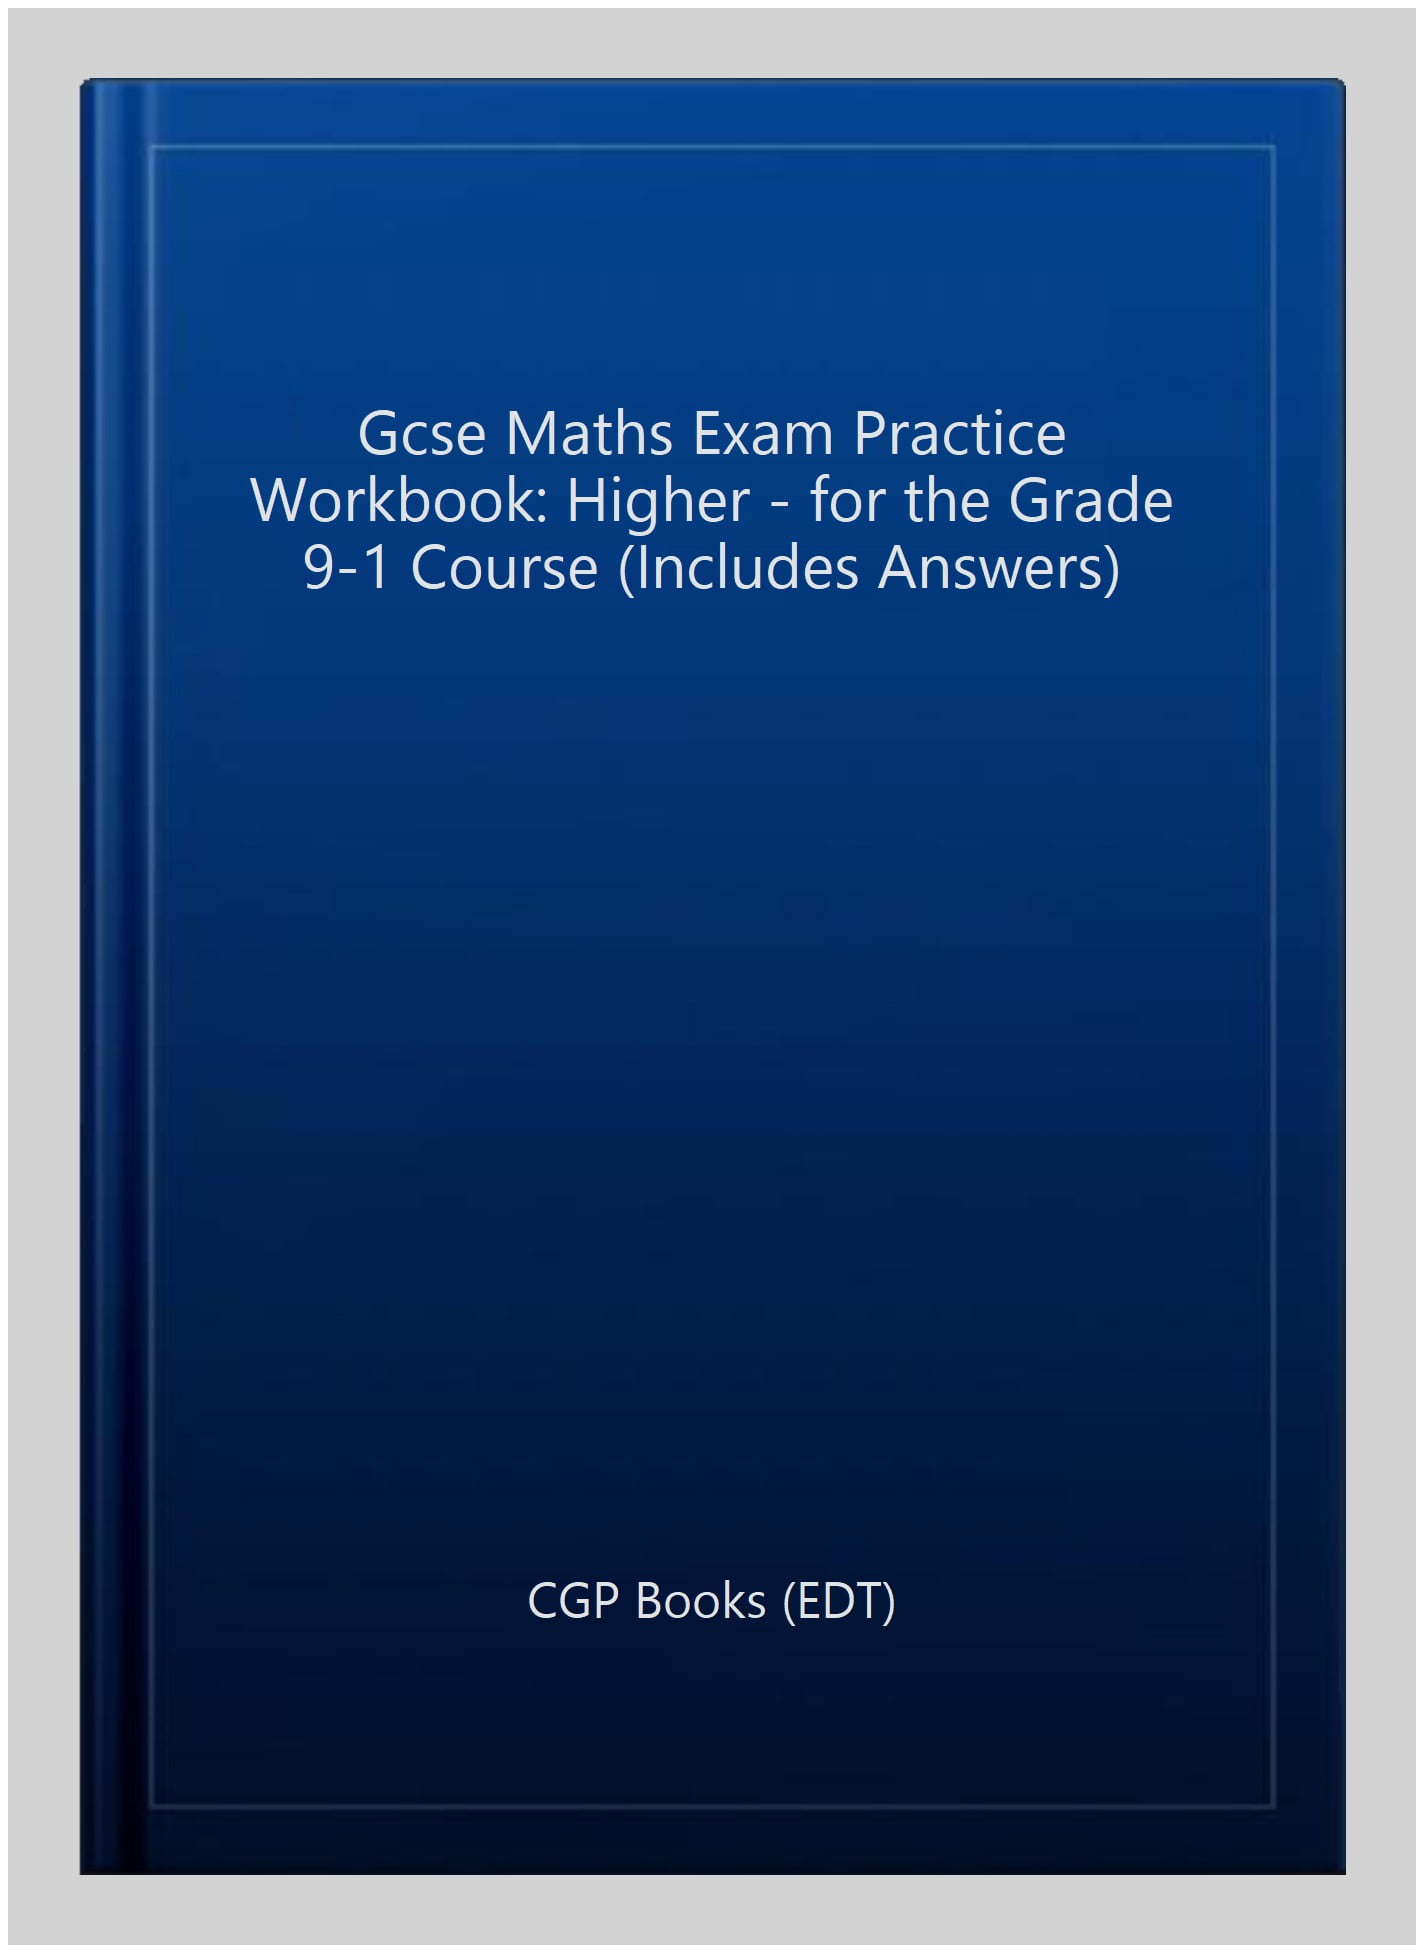 Gcse Maths Exam Practice Workbook Higher For The Grade 9 1 Course Includes Answers Walmart Com Walmart Com